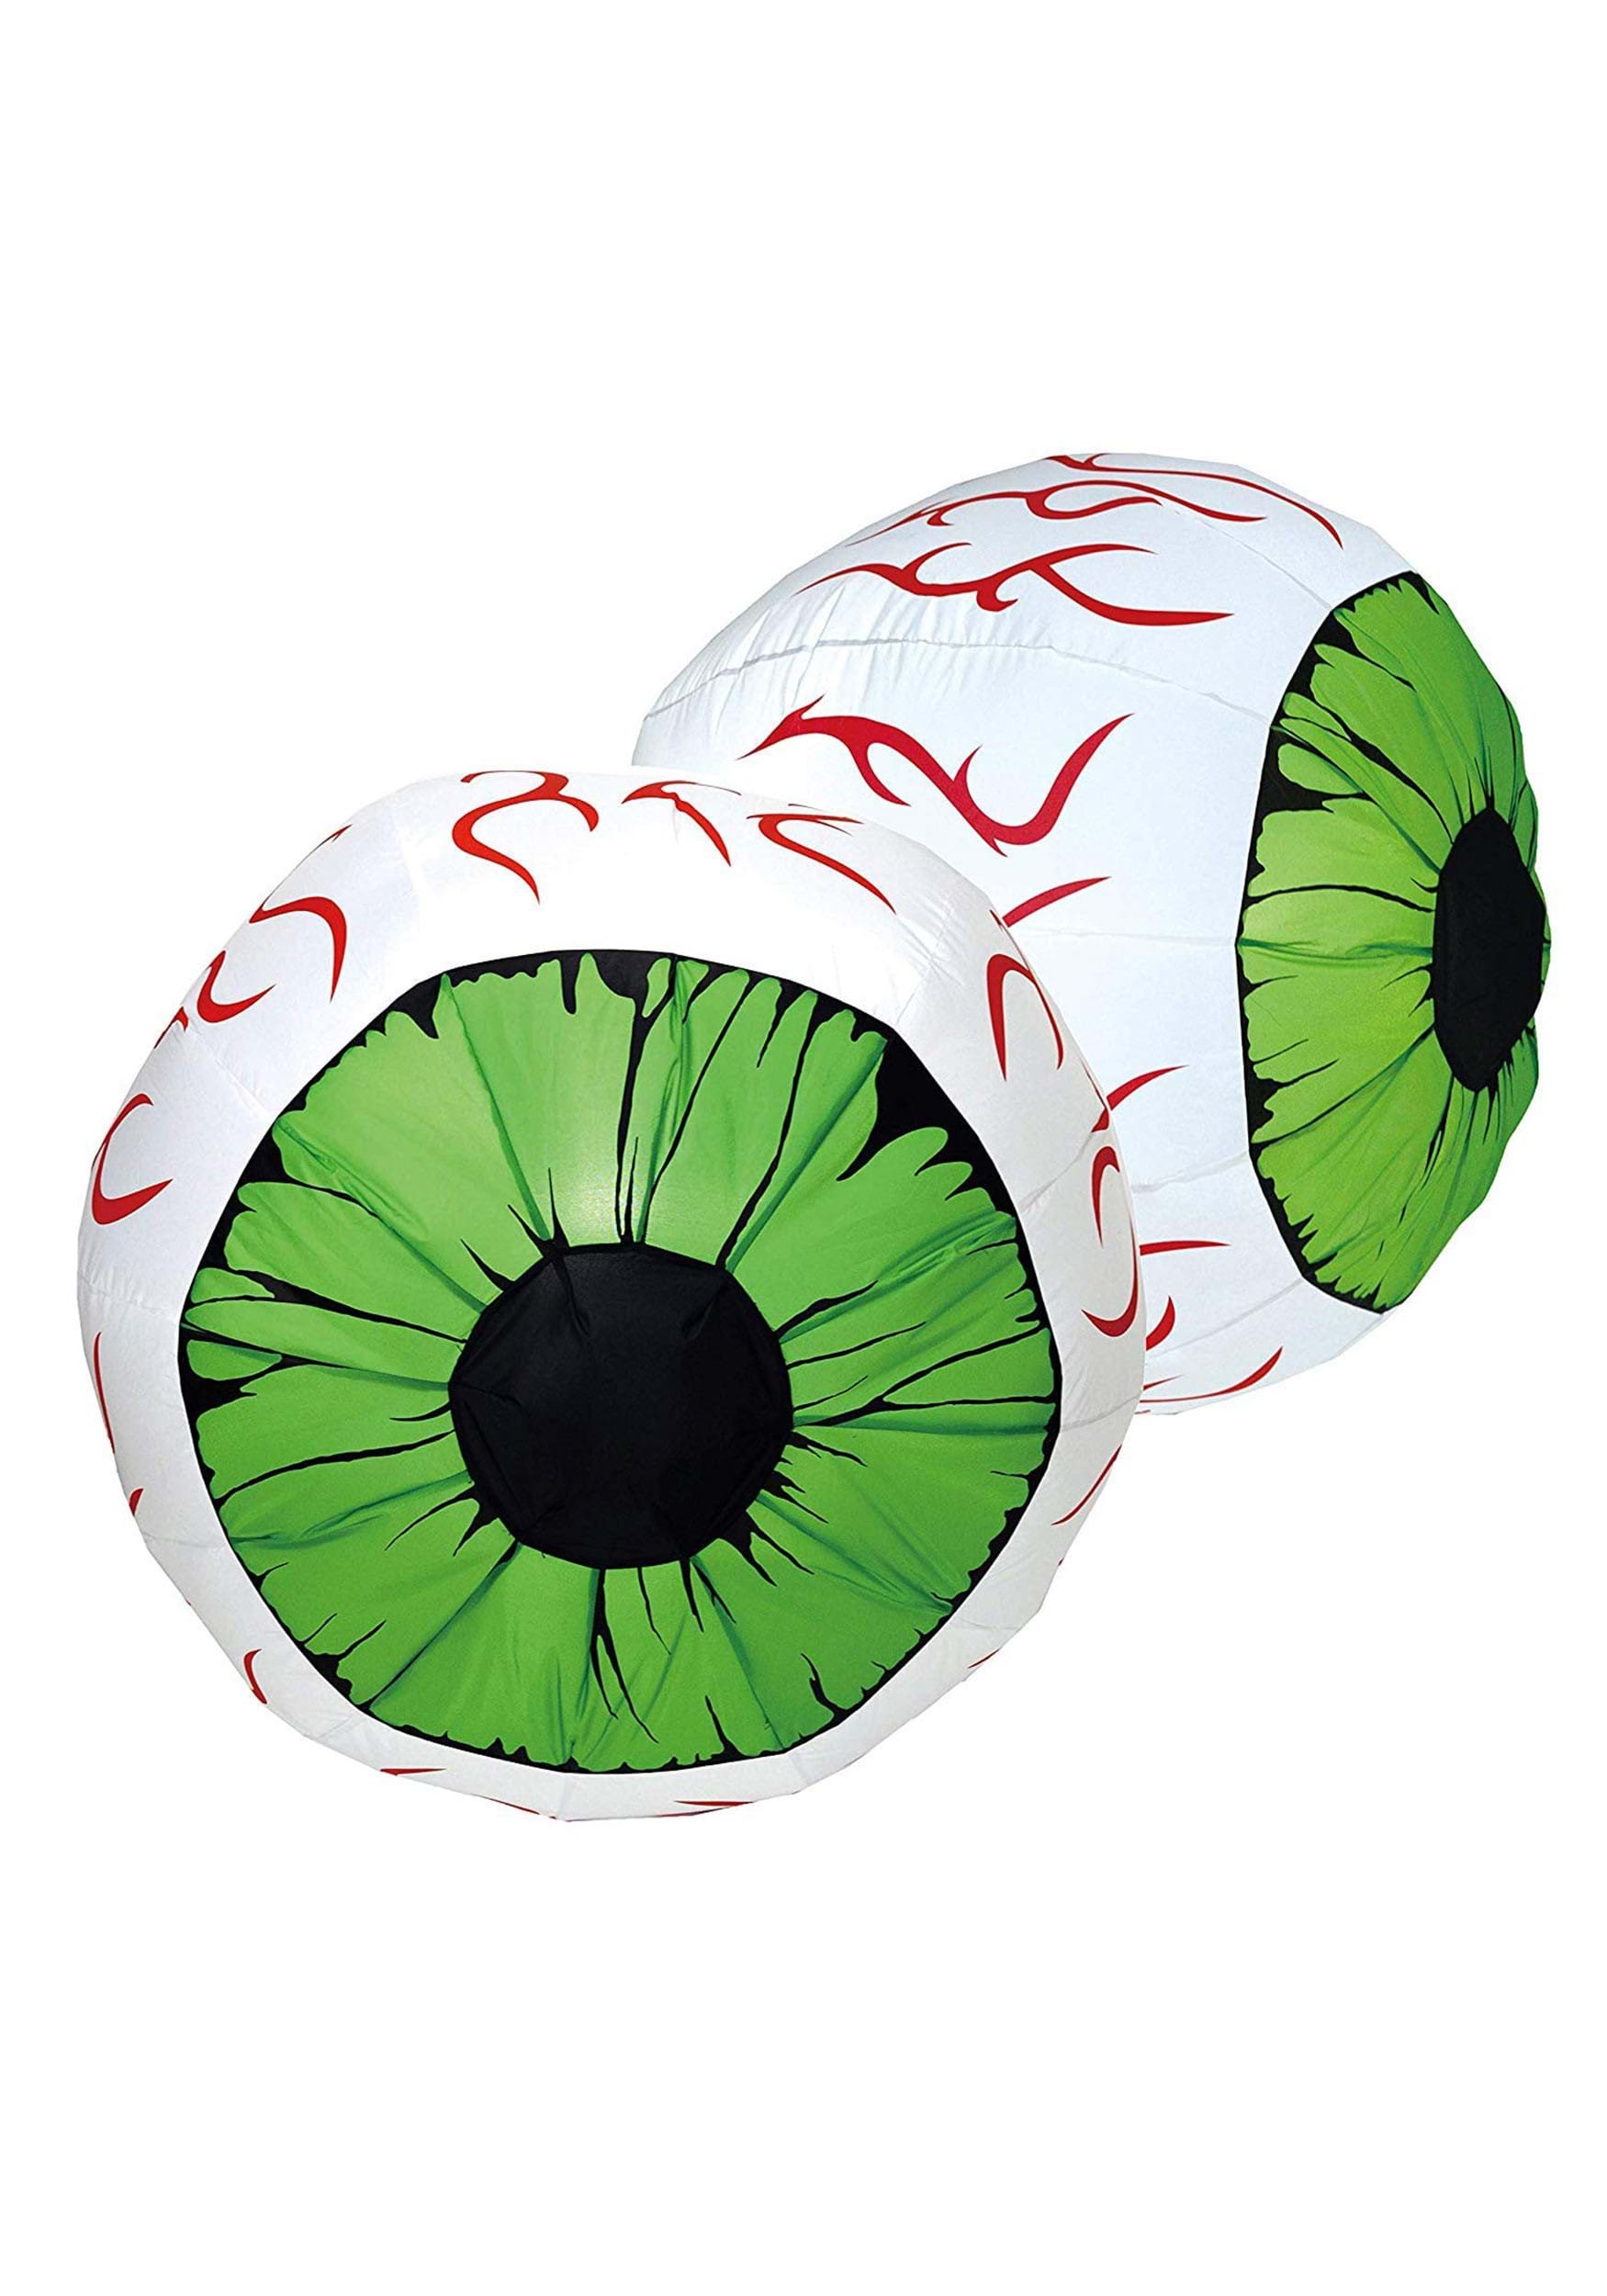 3 Foot Inflatable Eyeballs Halloween Decoration